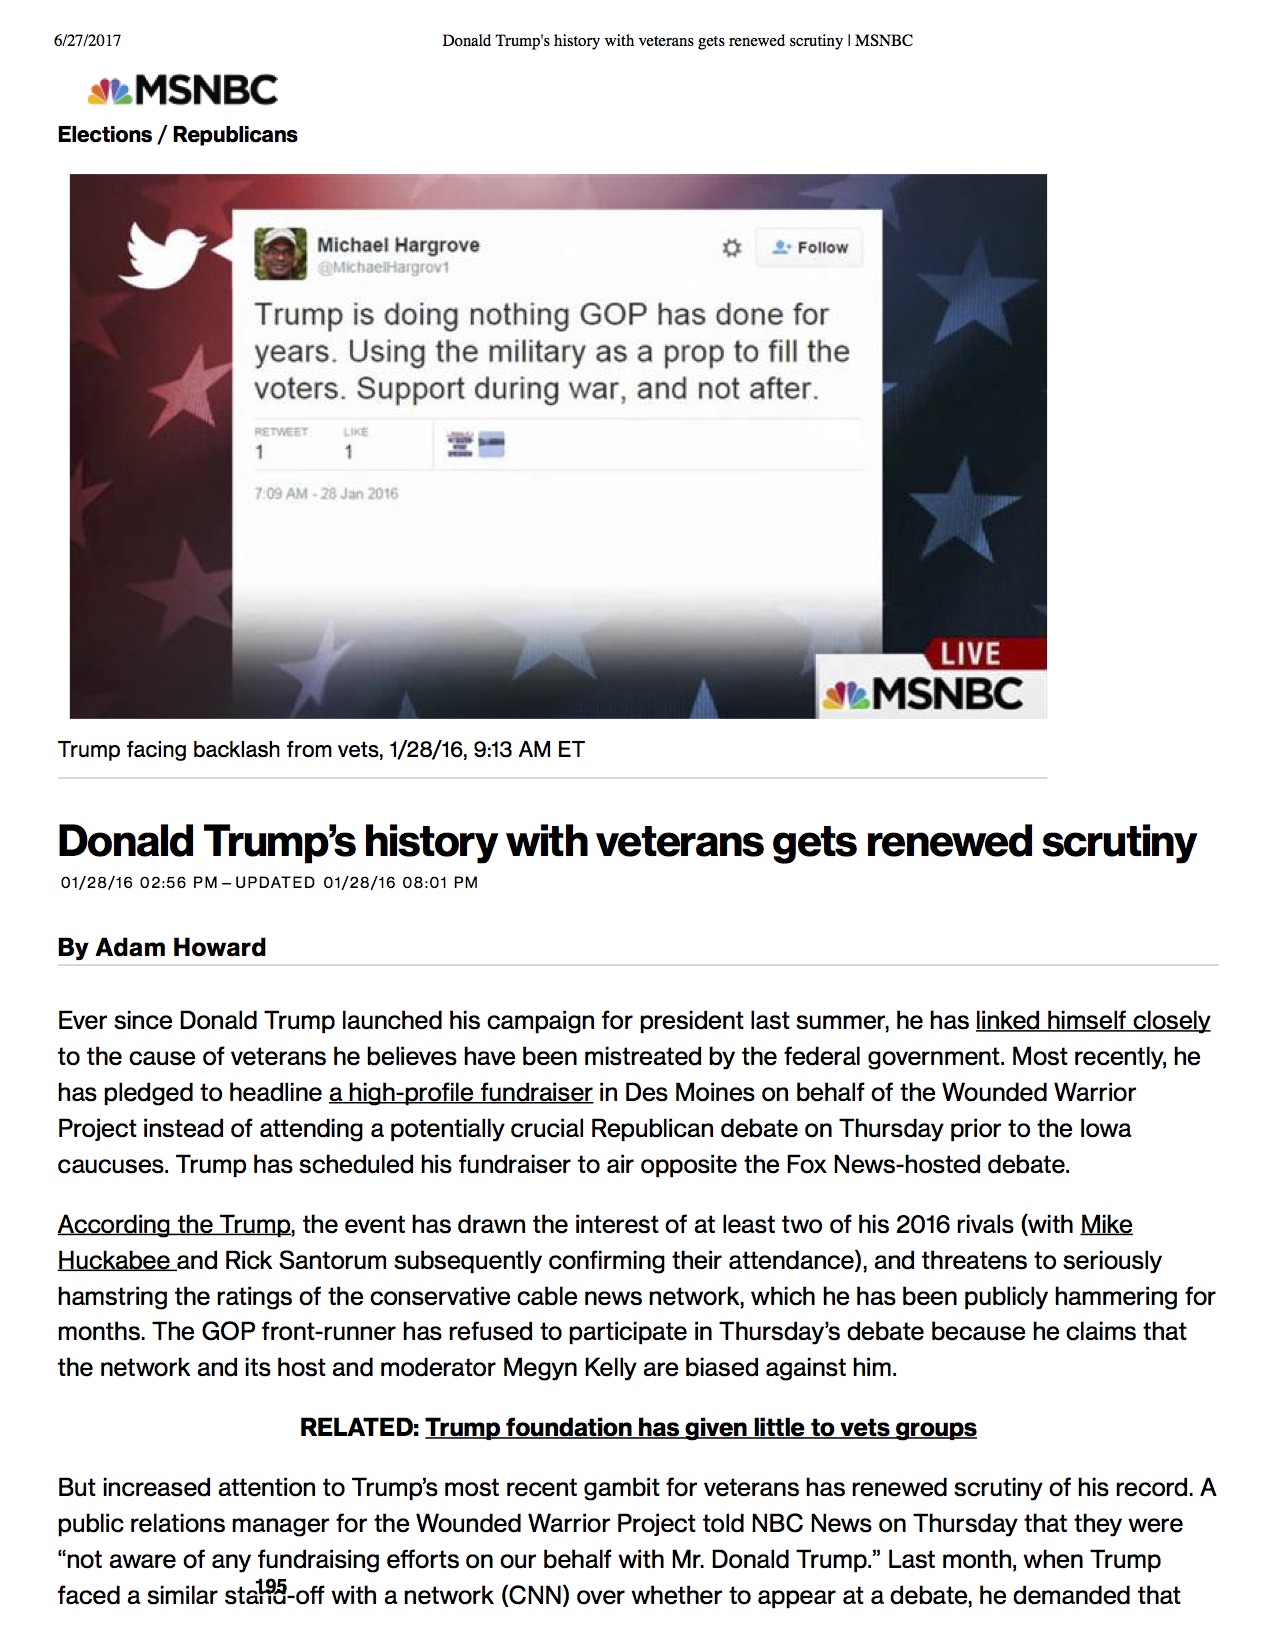 1Donald Trump's history with veterans gets renewed scrutiny _ MSNBC.jpg